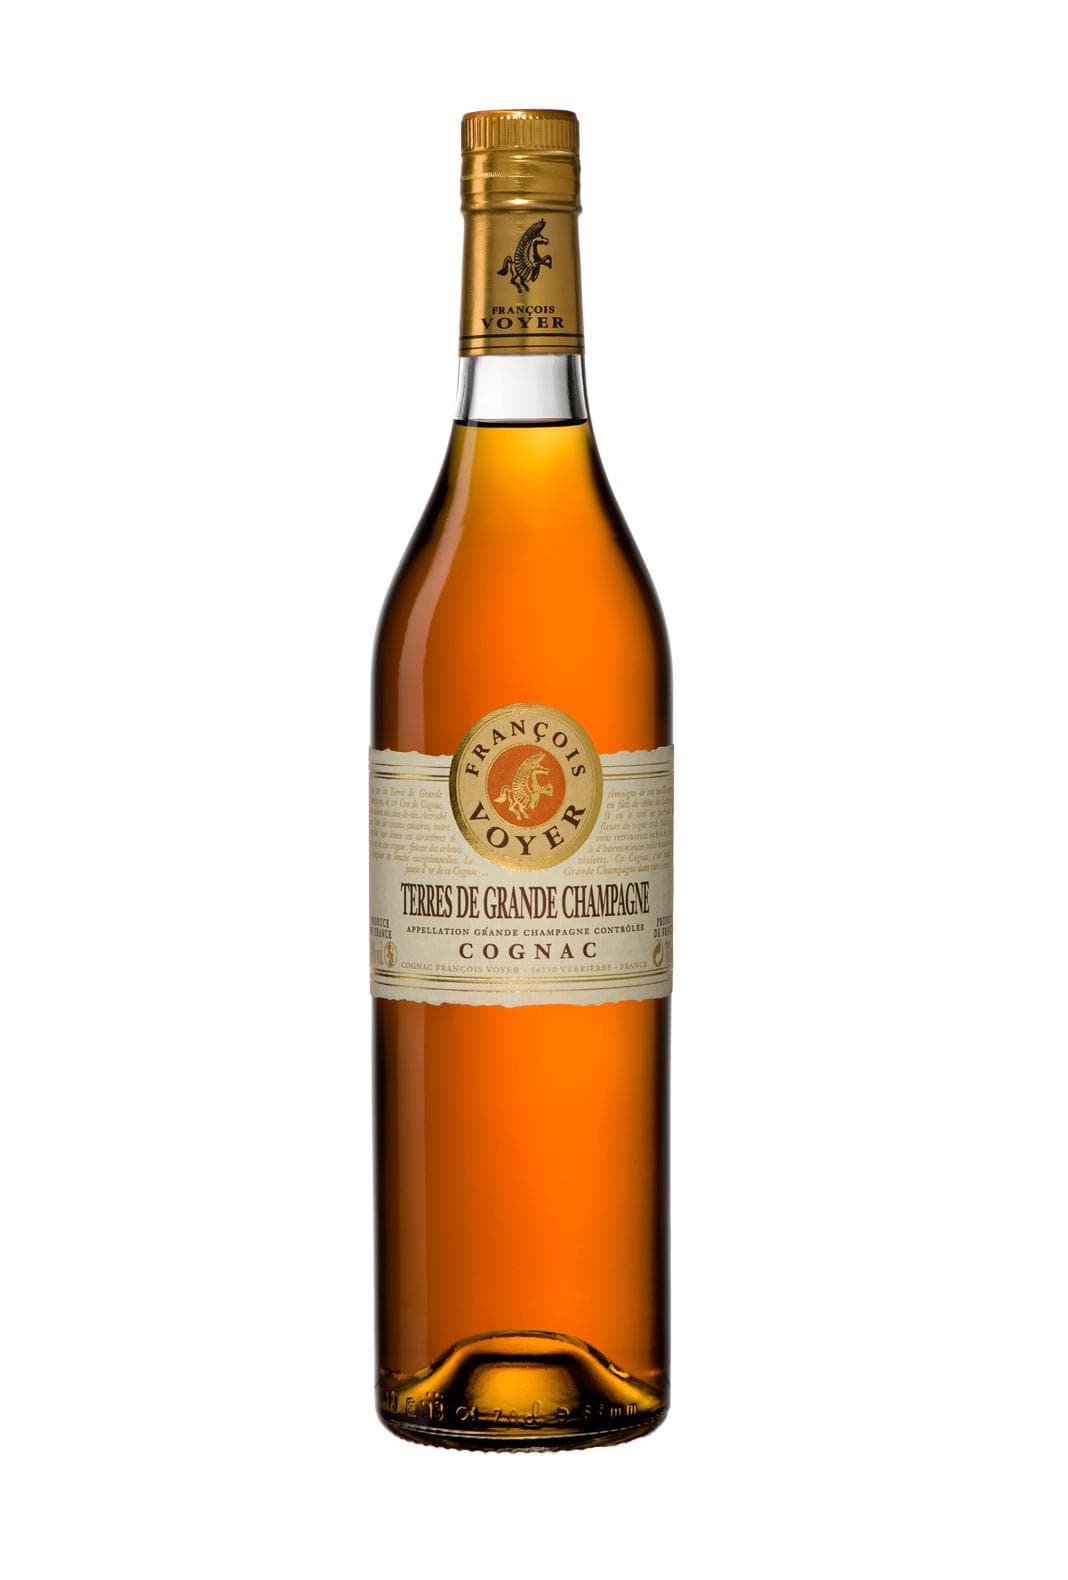 Francois Voyer Cognac 'Terre de Grande Champagne' 5 years 40% 700ml | Brandy | Shop online at Spirits of France